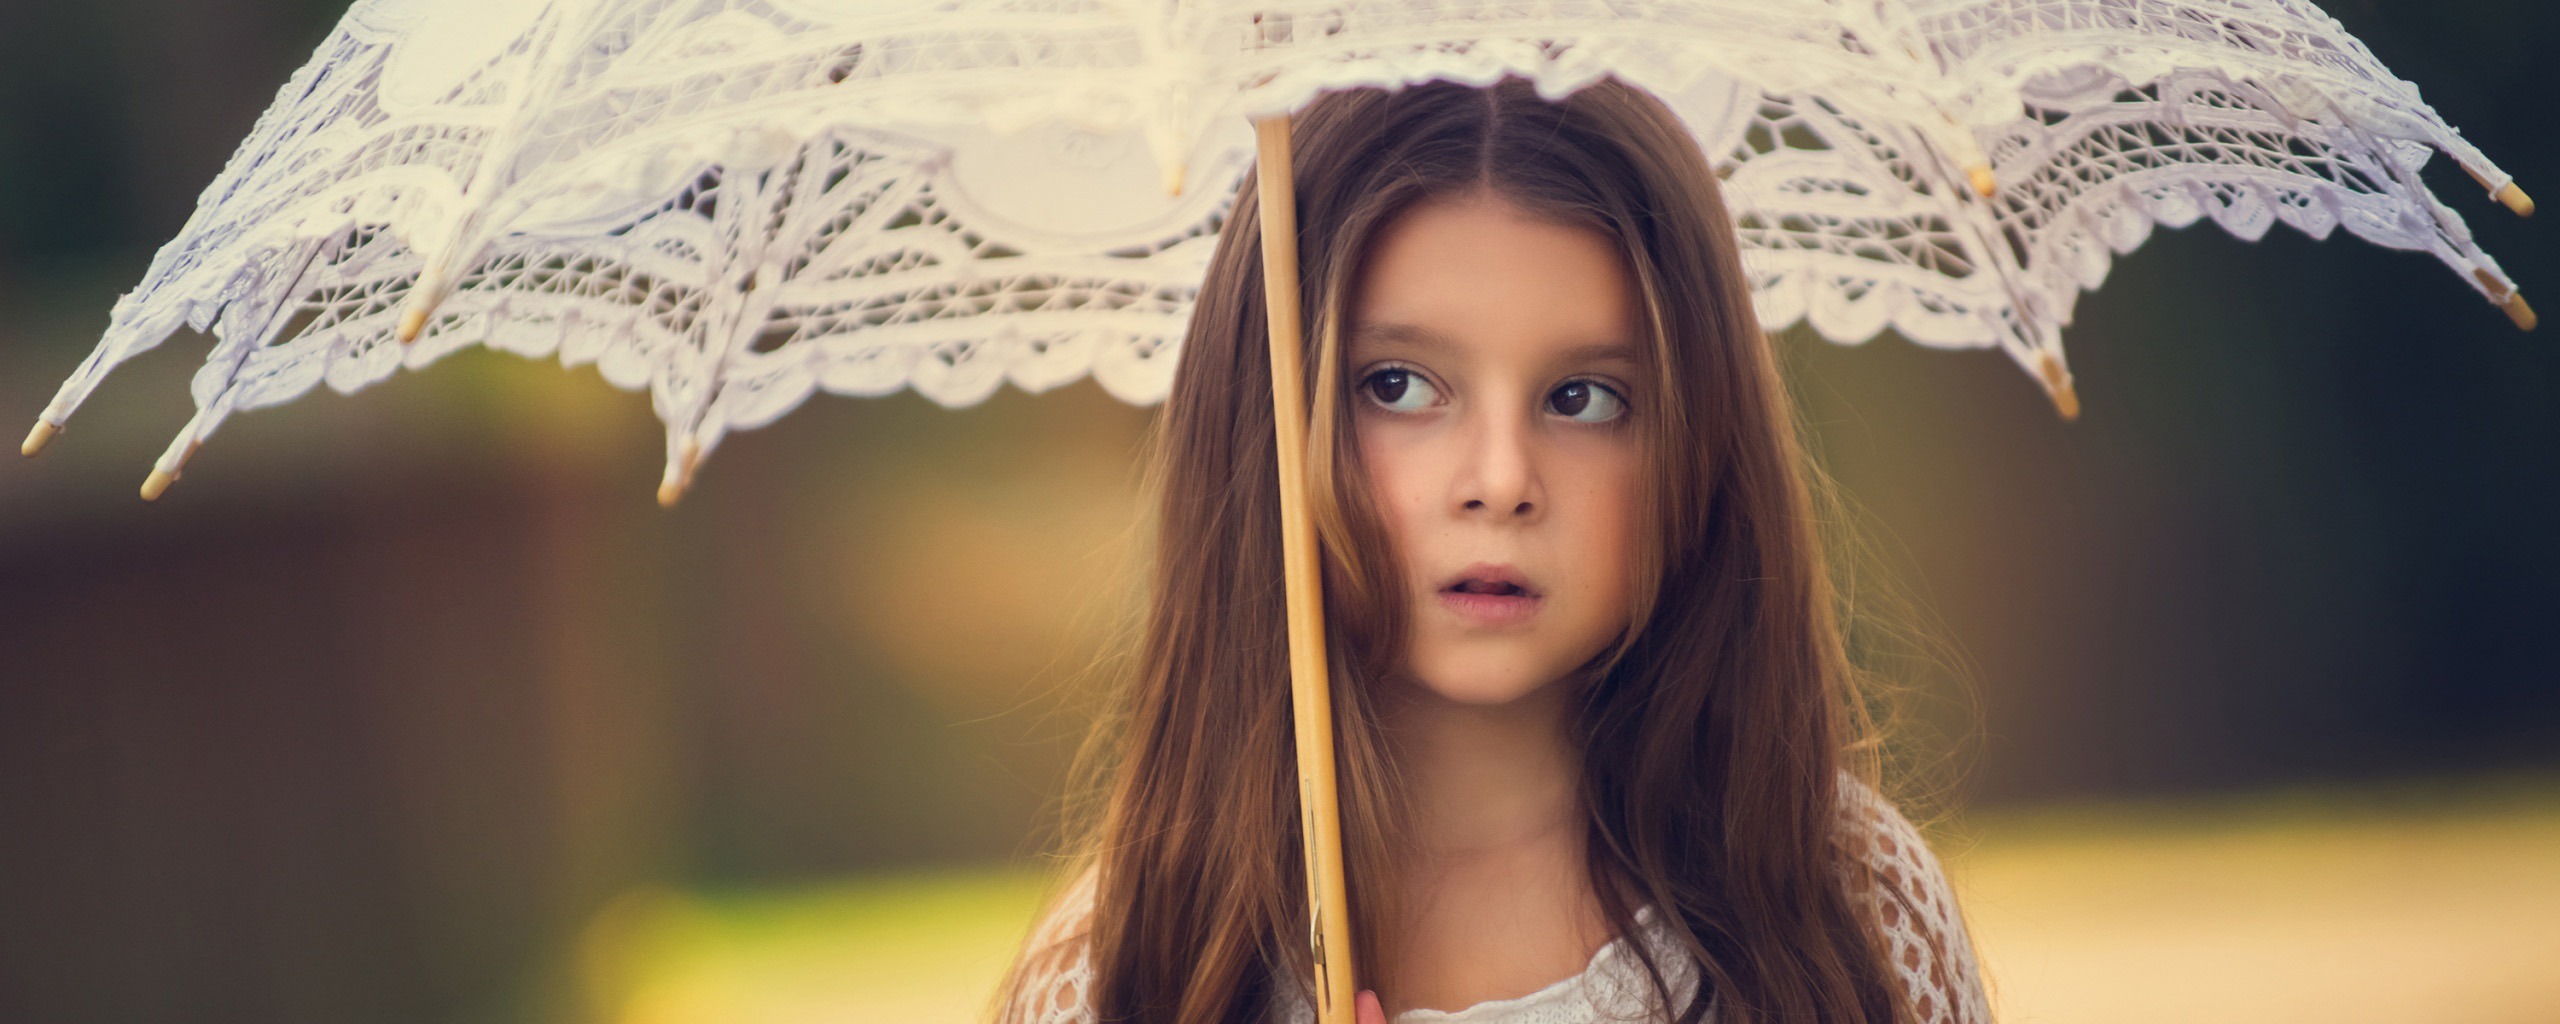 little-girl-with-umbrella-ff.jpg